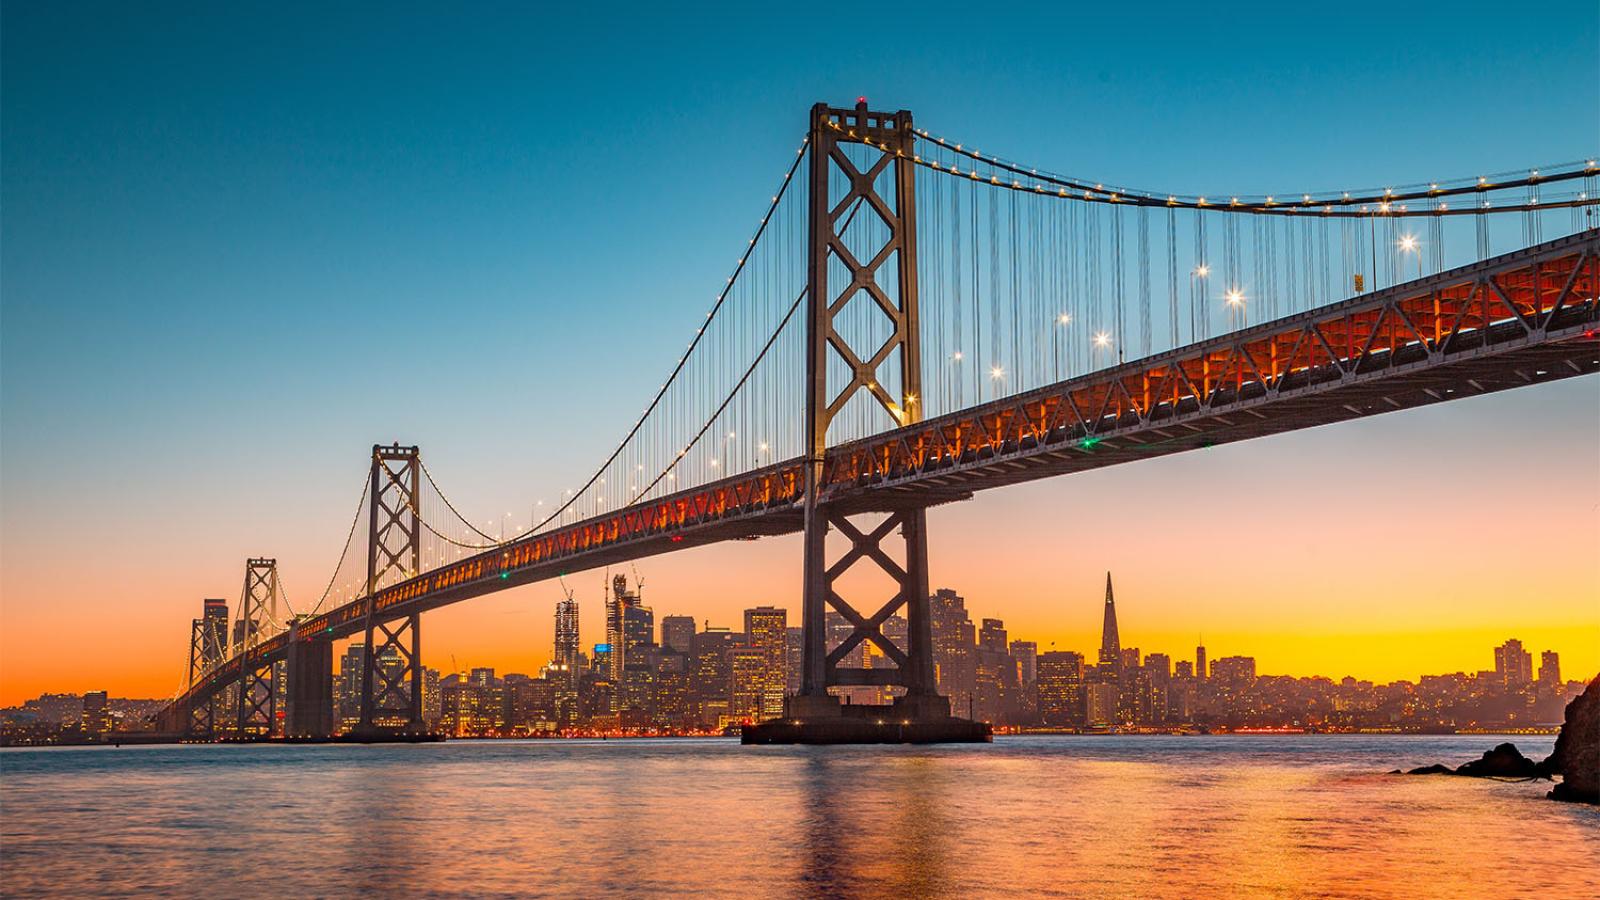 Golden Gate Bridge and San Francisco skyline at sunset